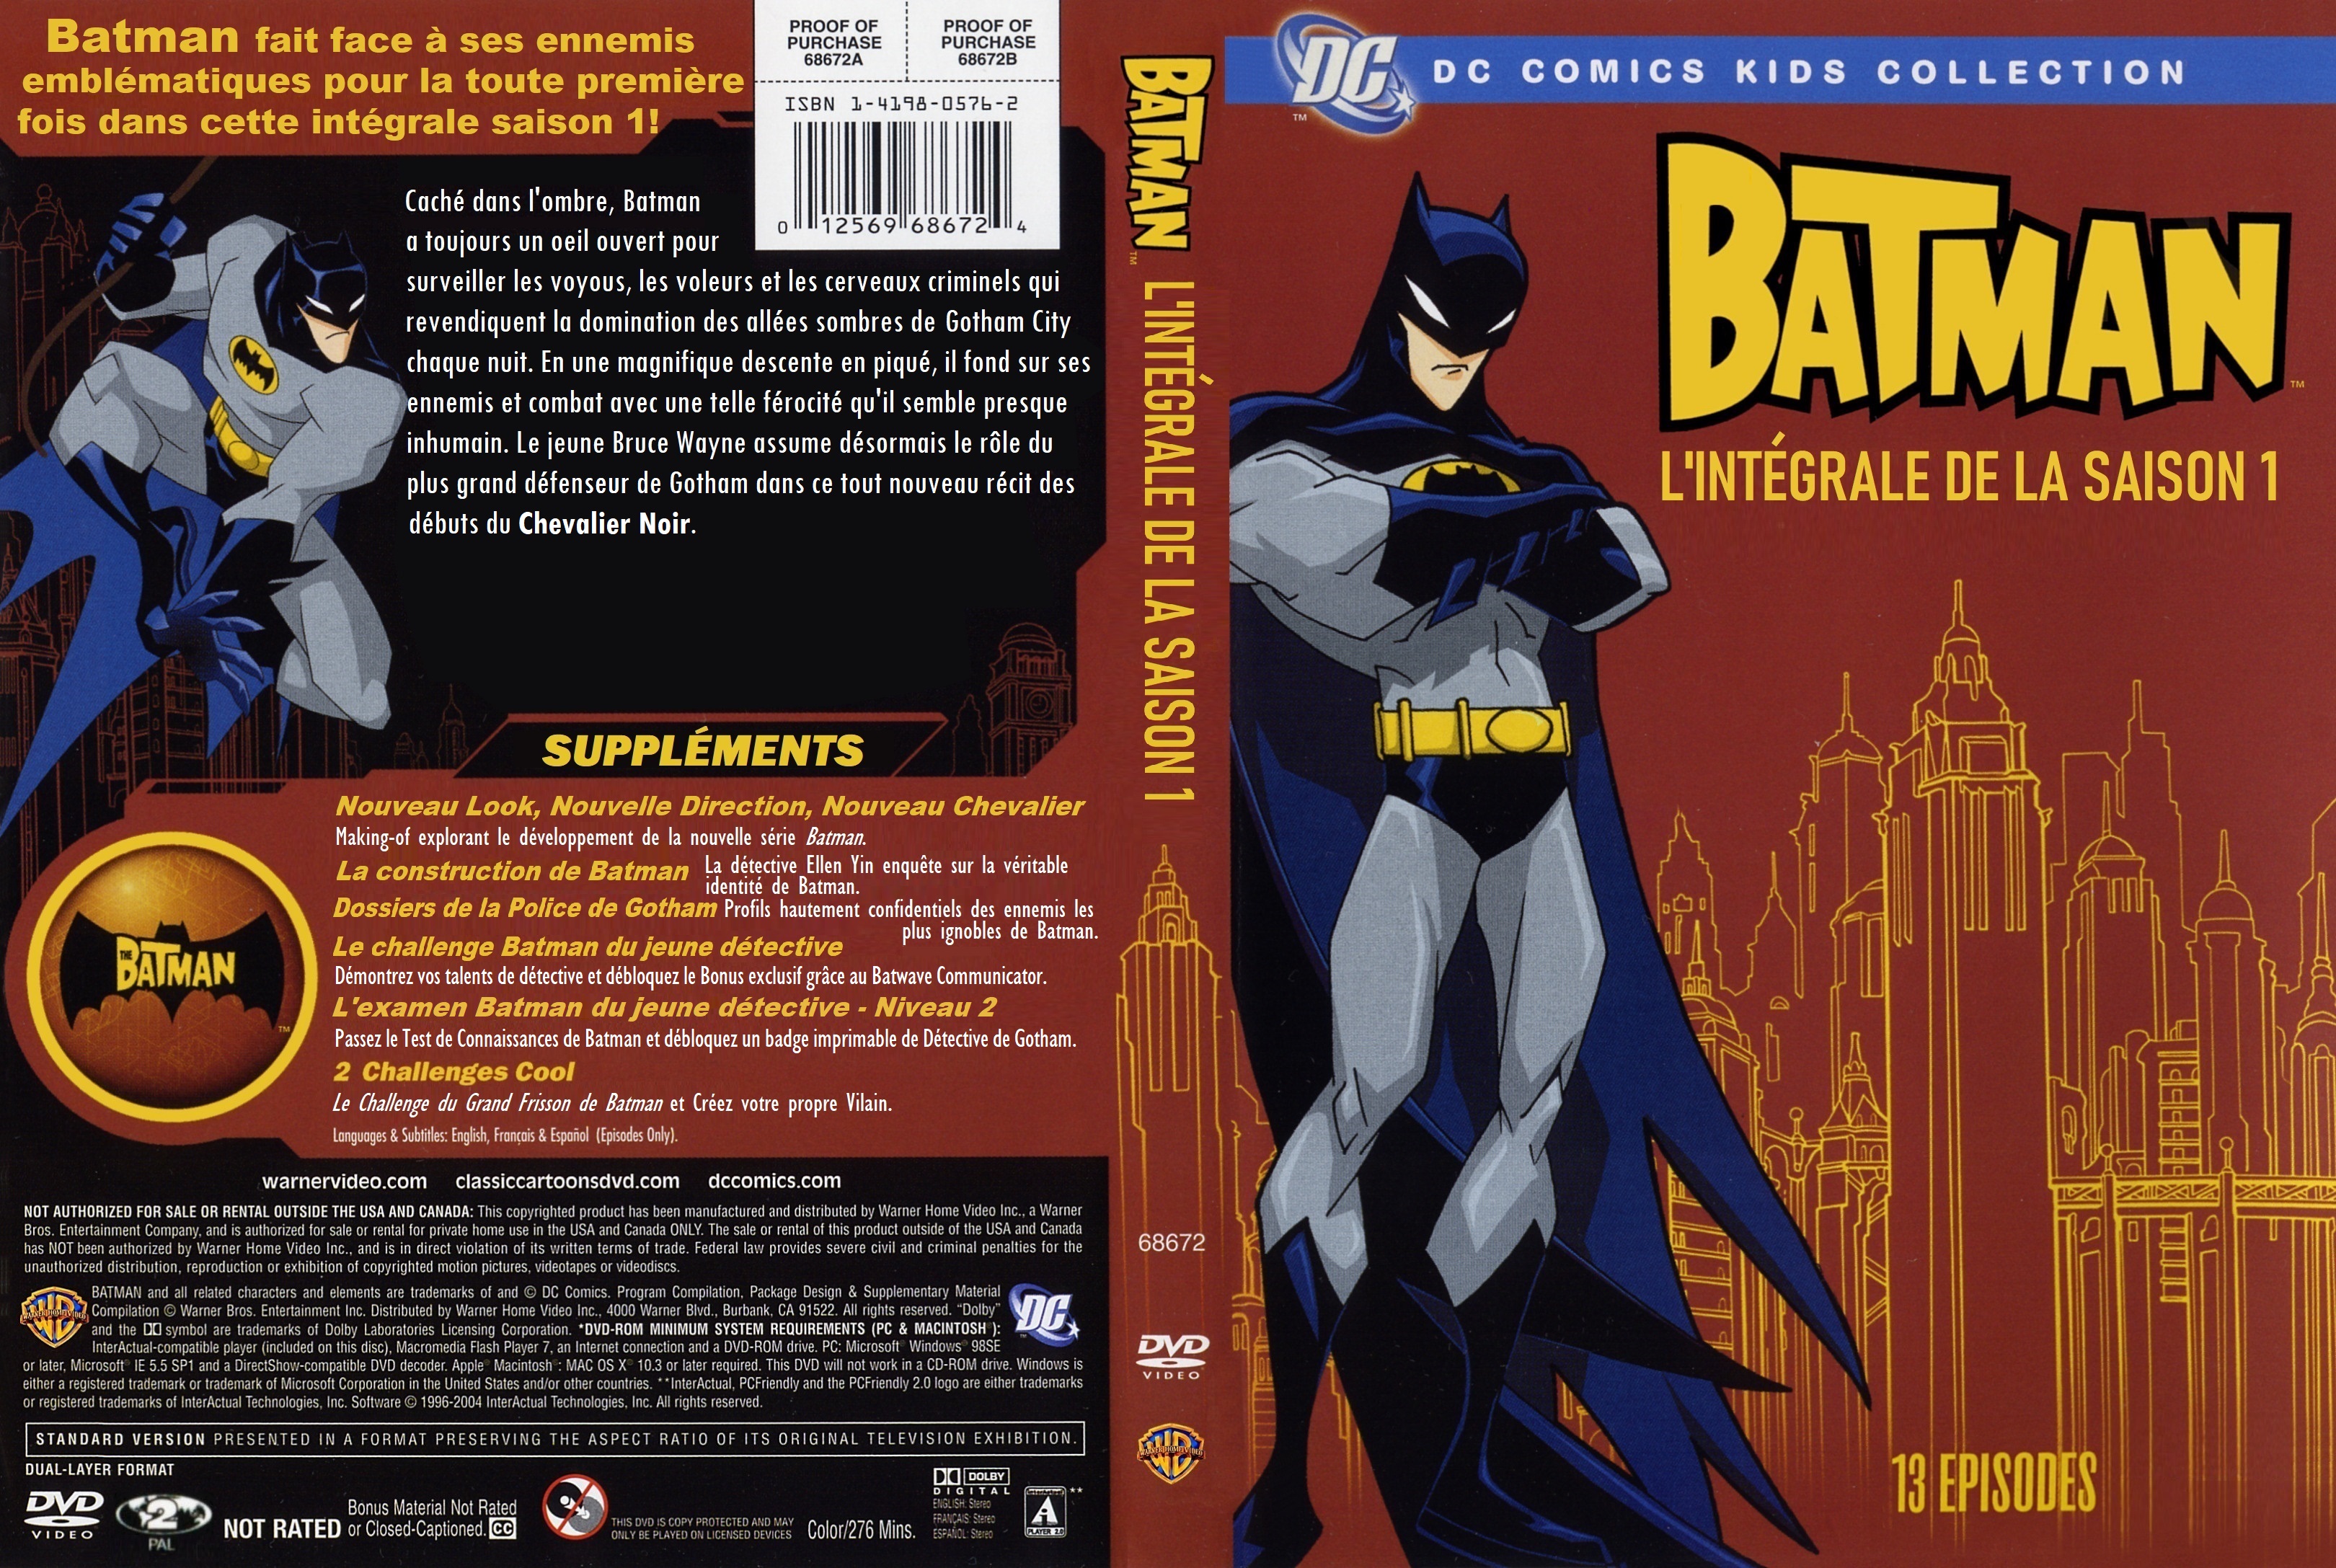 Jaquette DVD Batman Saison 1 custom